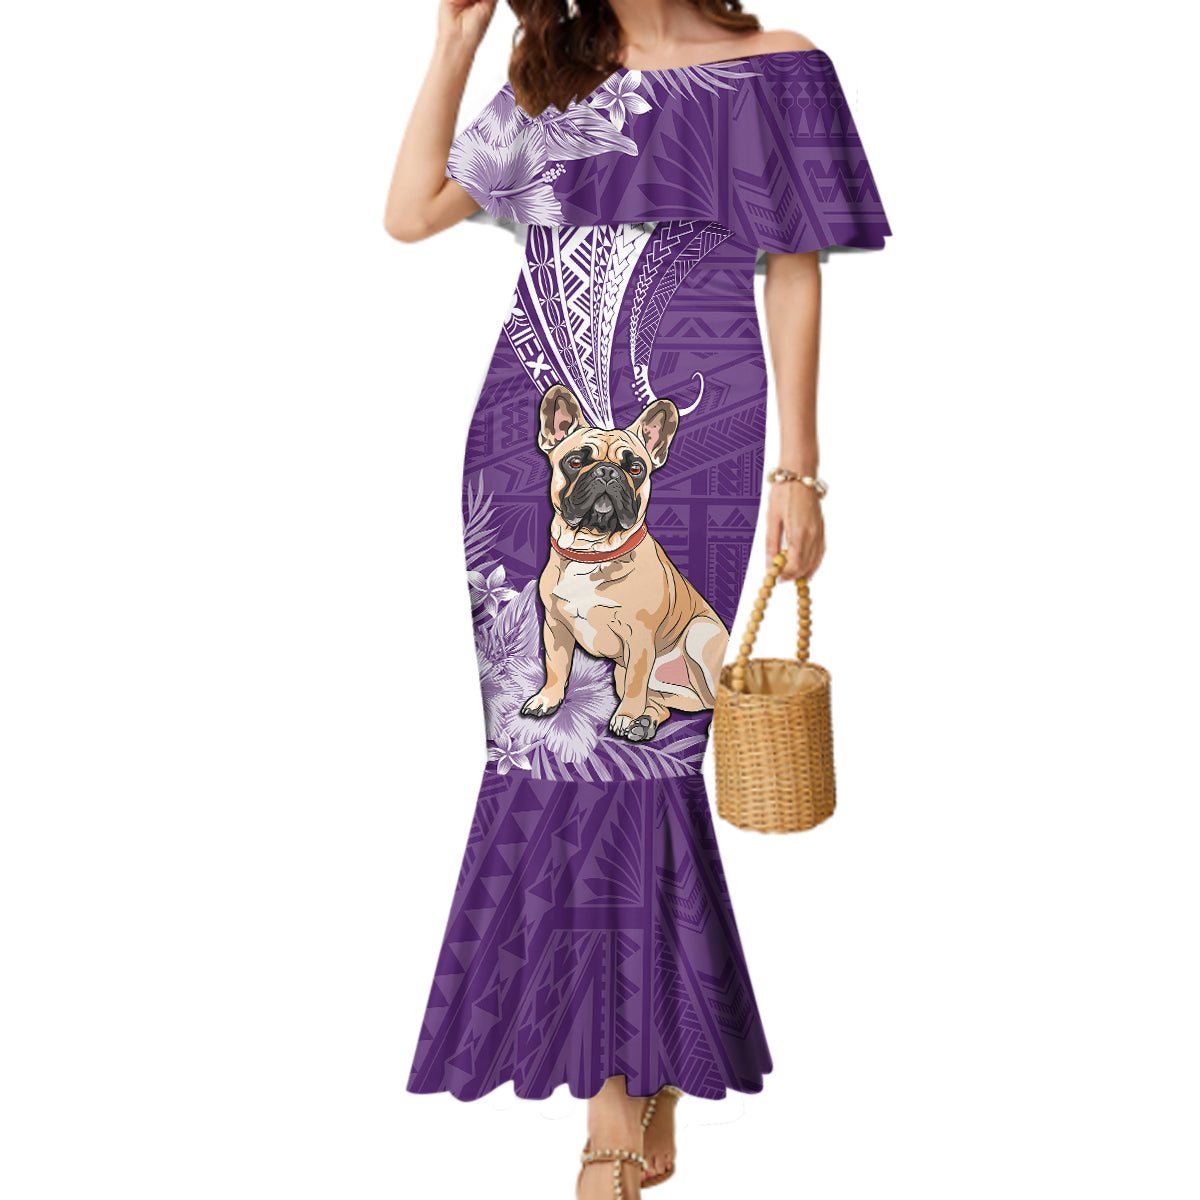 Personalised Polynesian Pacific Bulldog Mermaid Dress With Violet Hawaii Tribal Tattoo Patterns LT7 Women Purple - Polynesian Pride